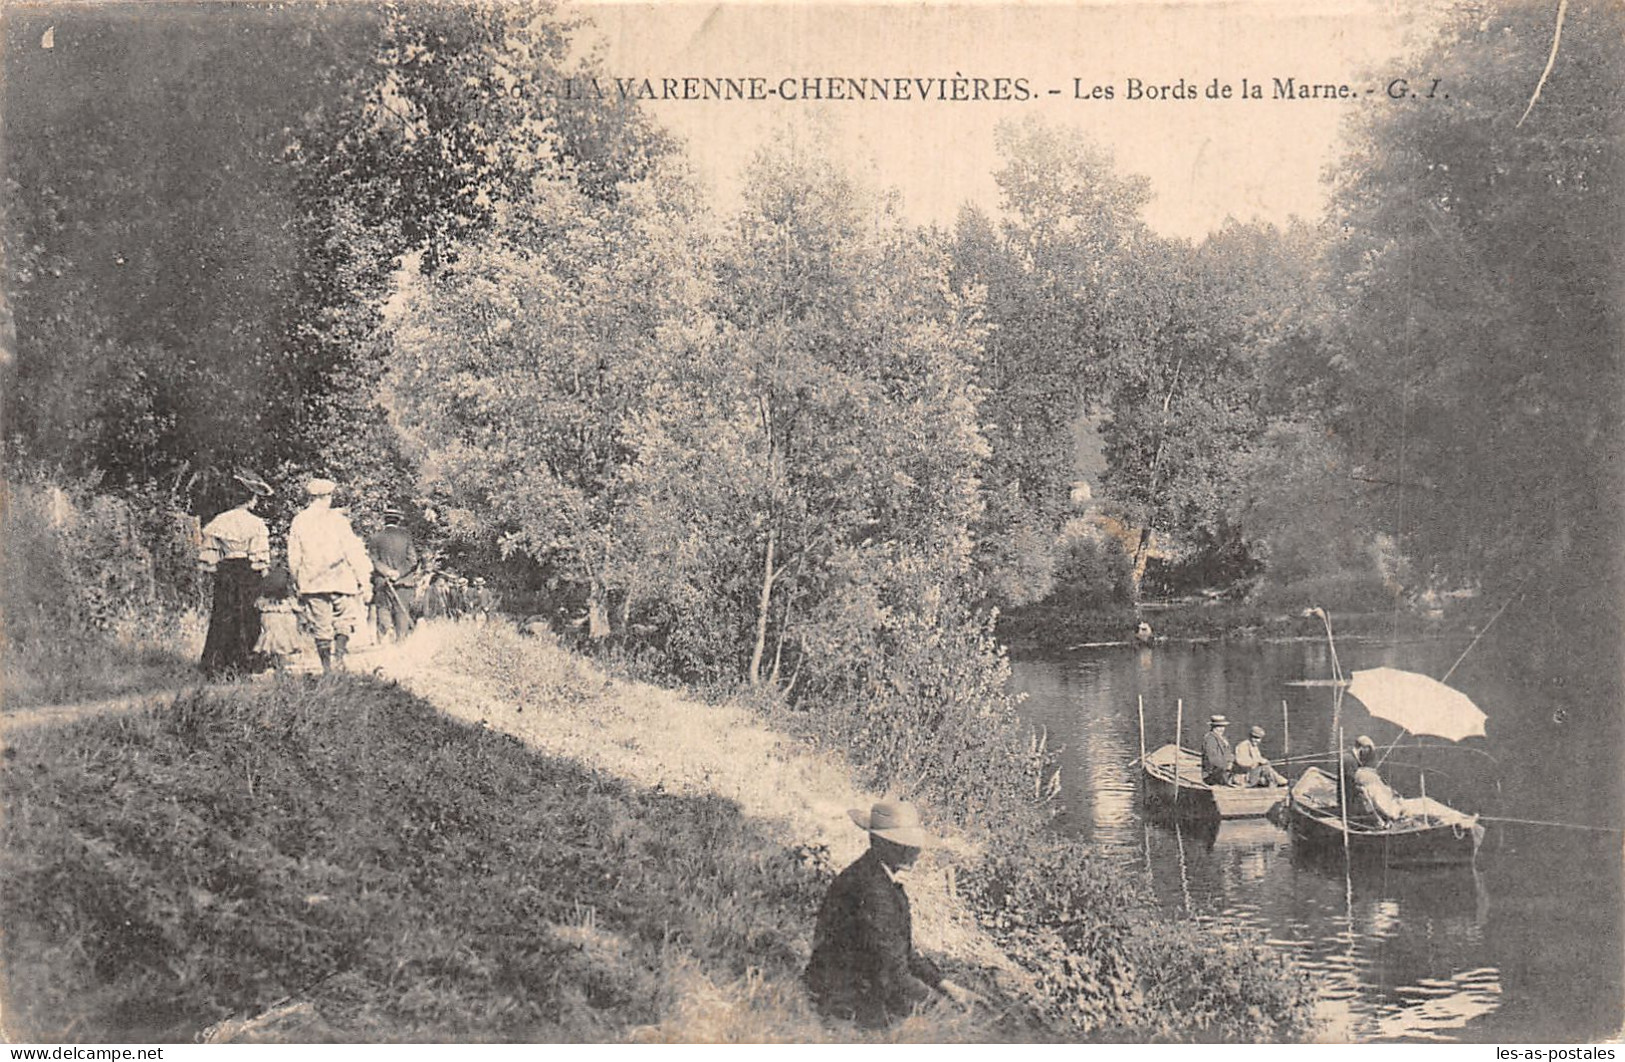 94 LA VARENNE CHENNEVIERES - Chennevieres Sur Marne